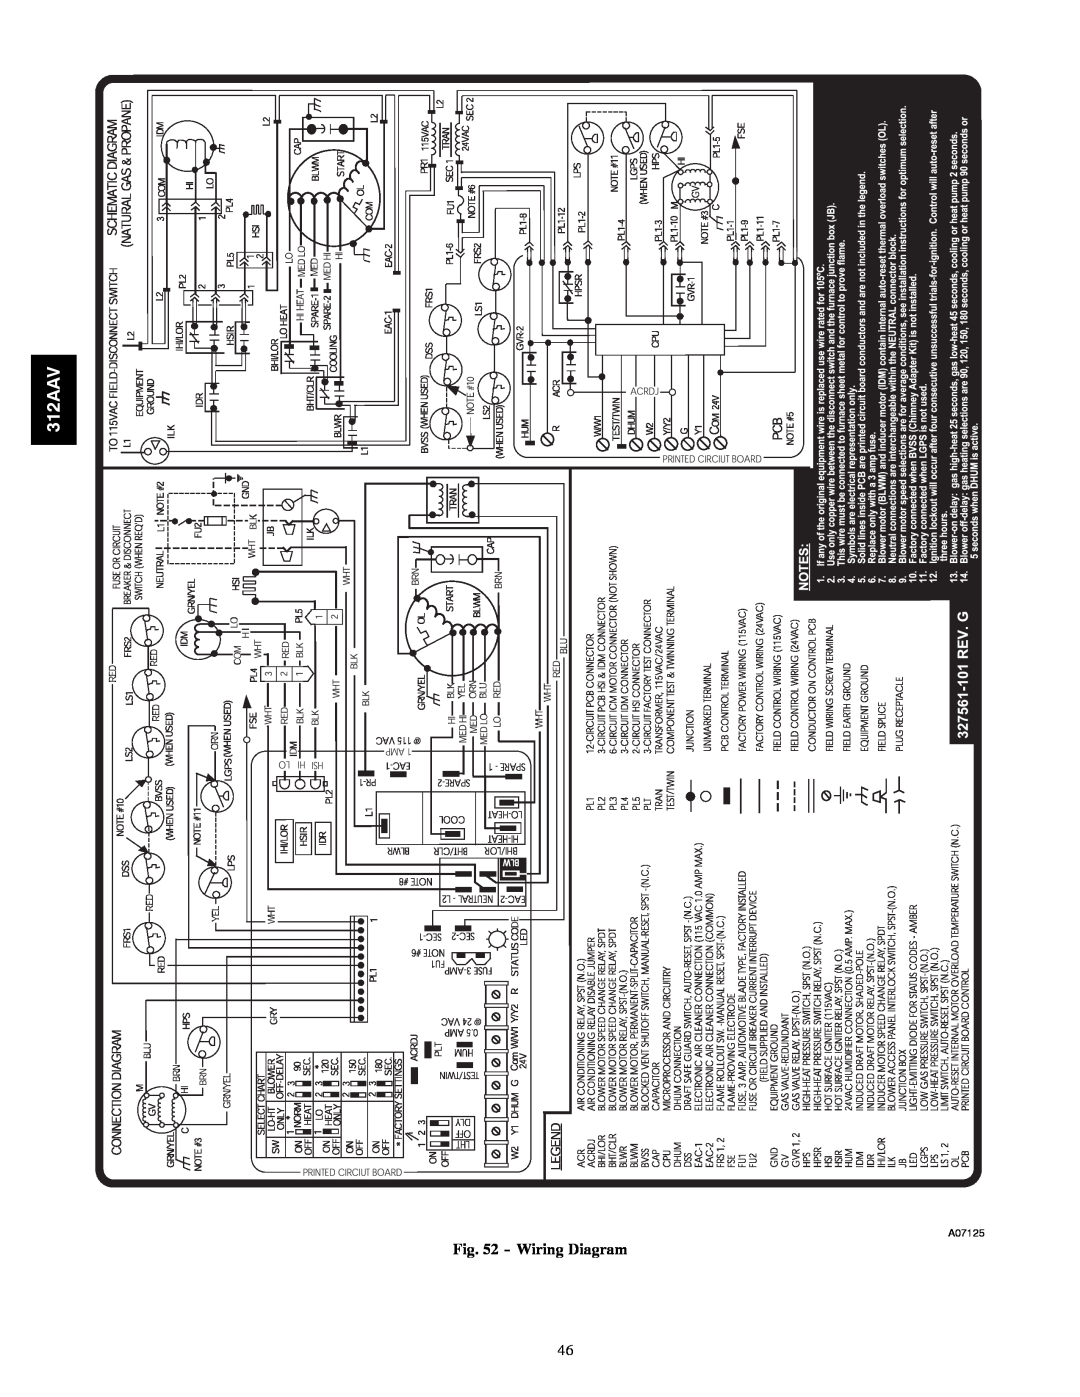 Bryant 312AAV/JAV instruction manual Wiring Diagram, A07125 